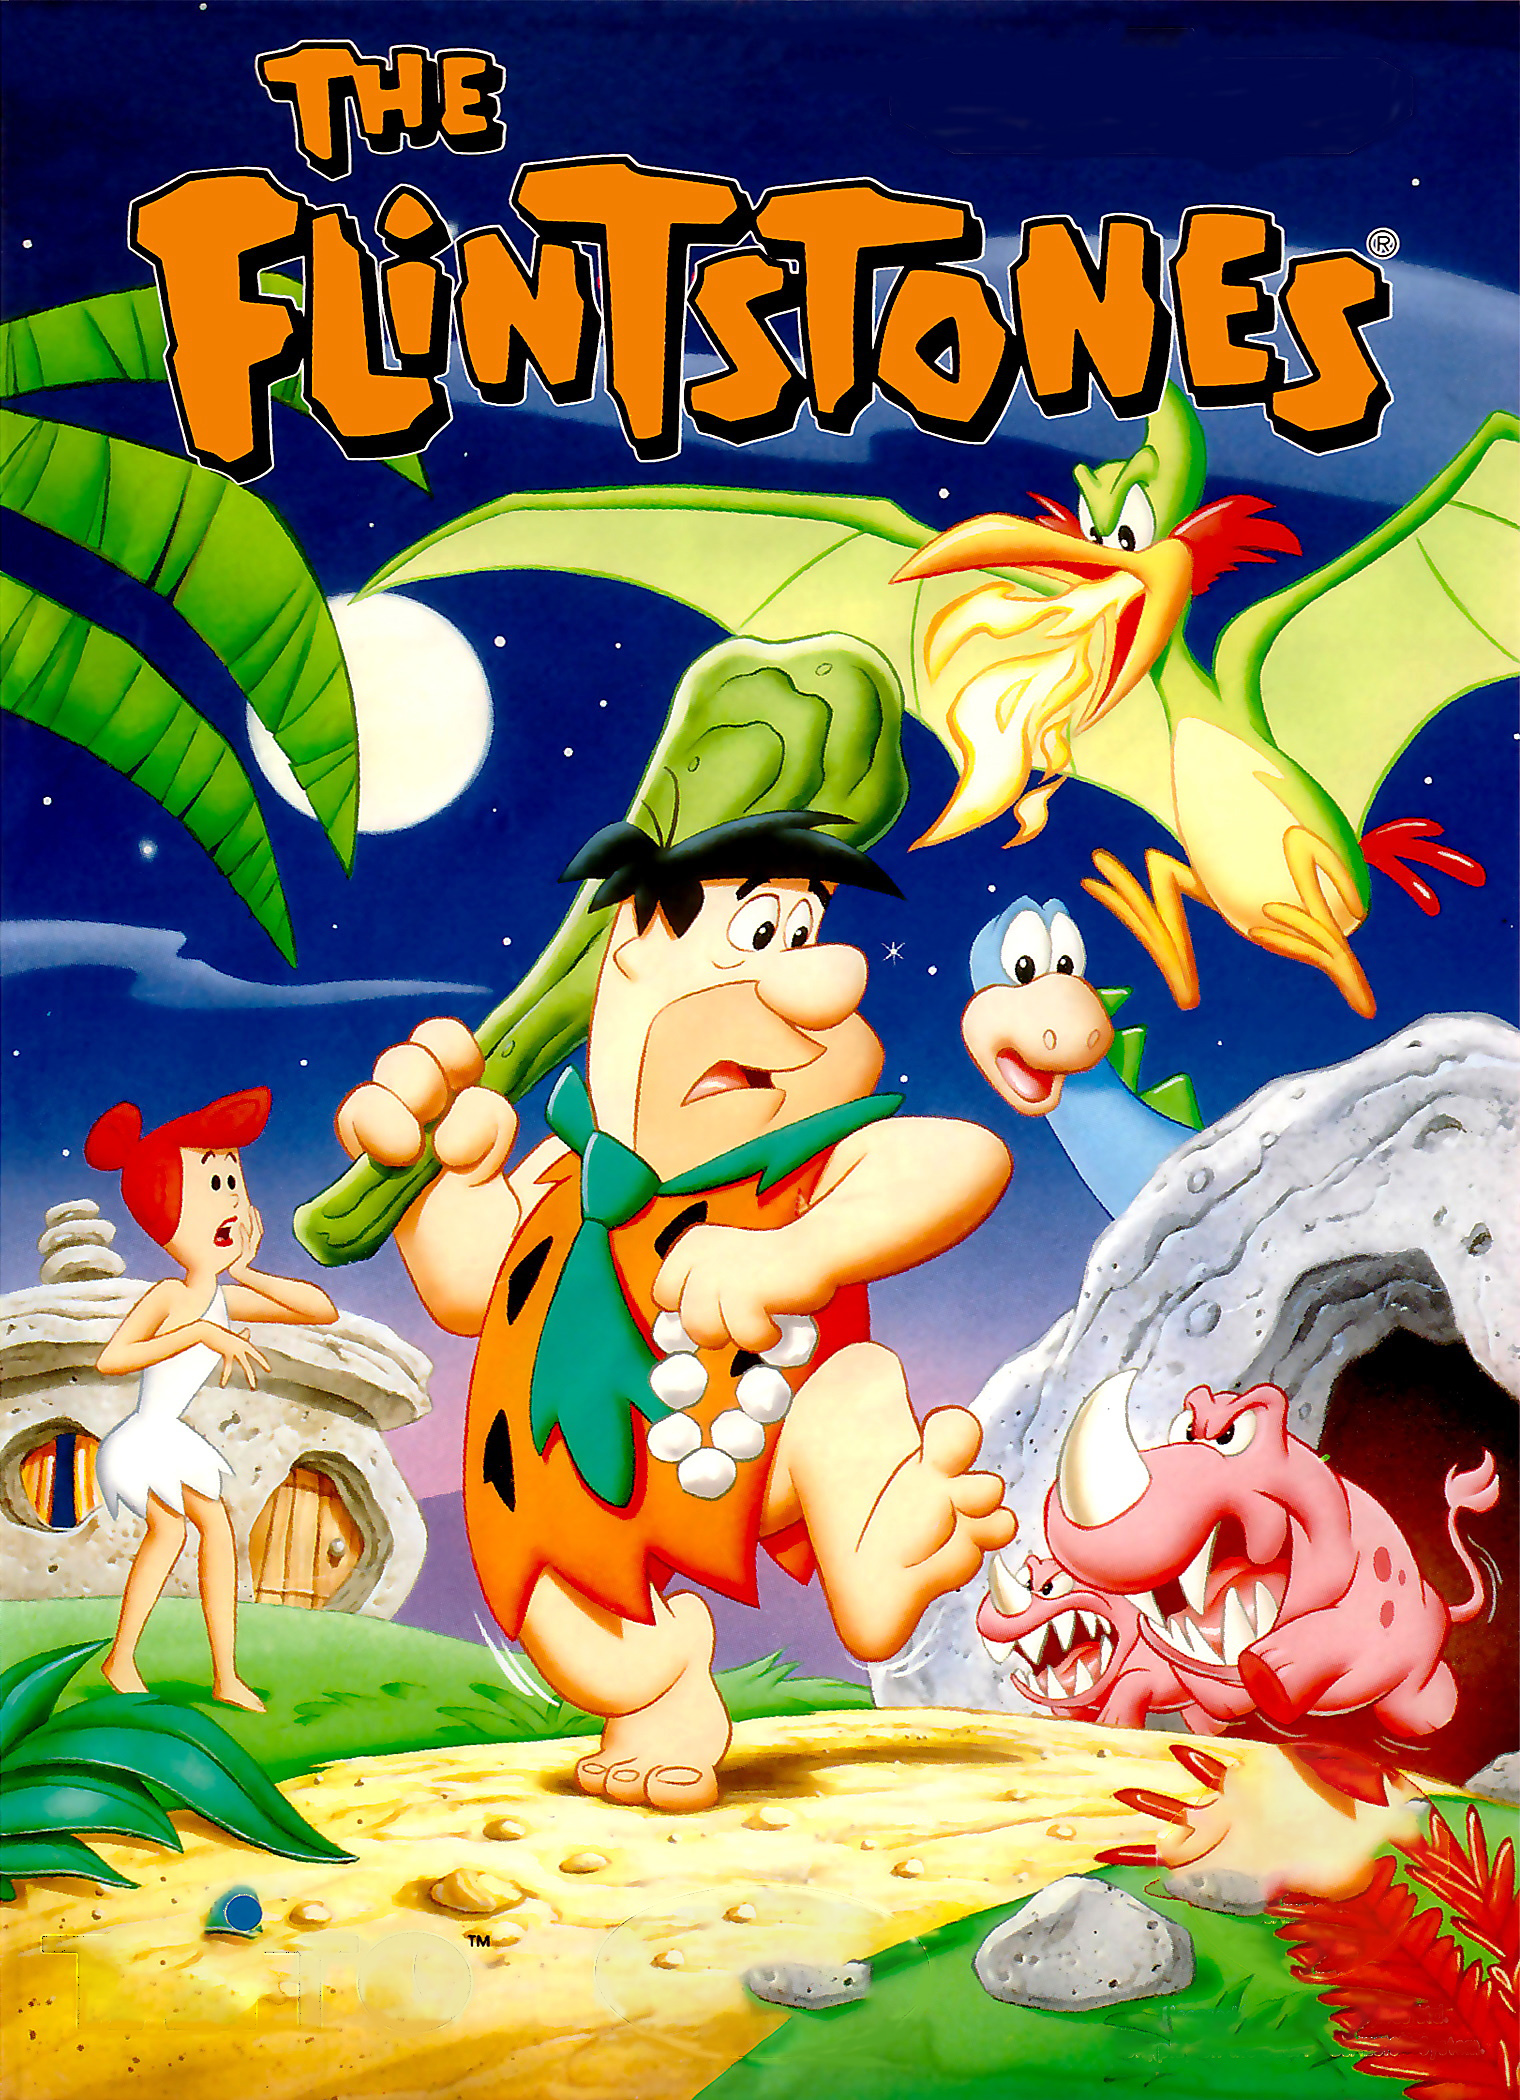 The Flintstones Images - LaunchBox Games Database